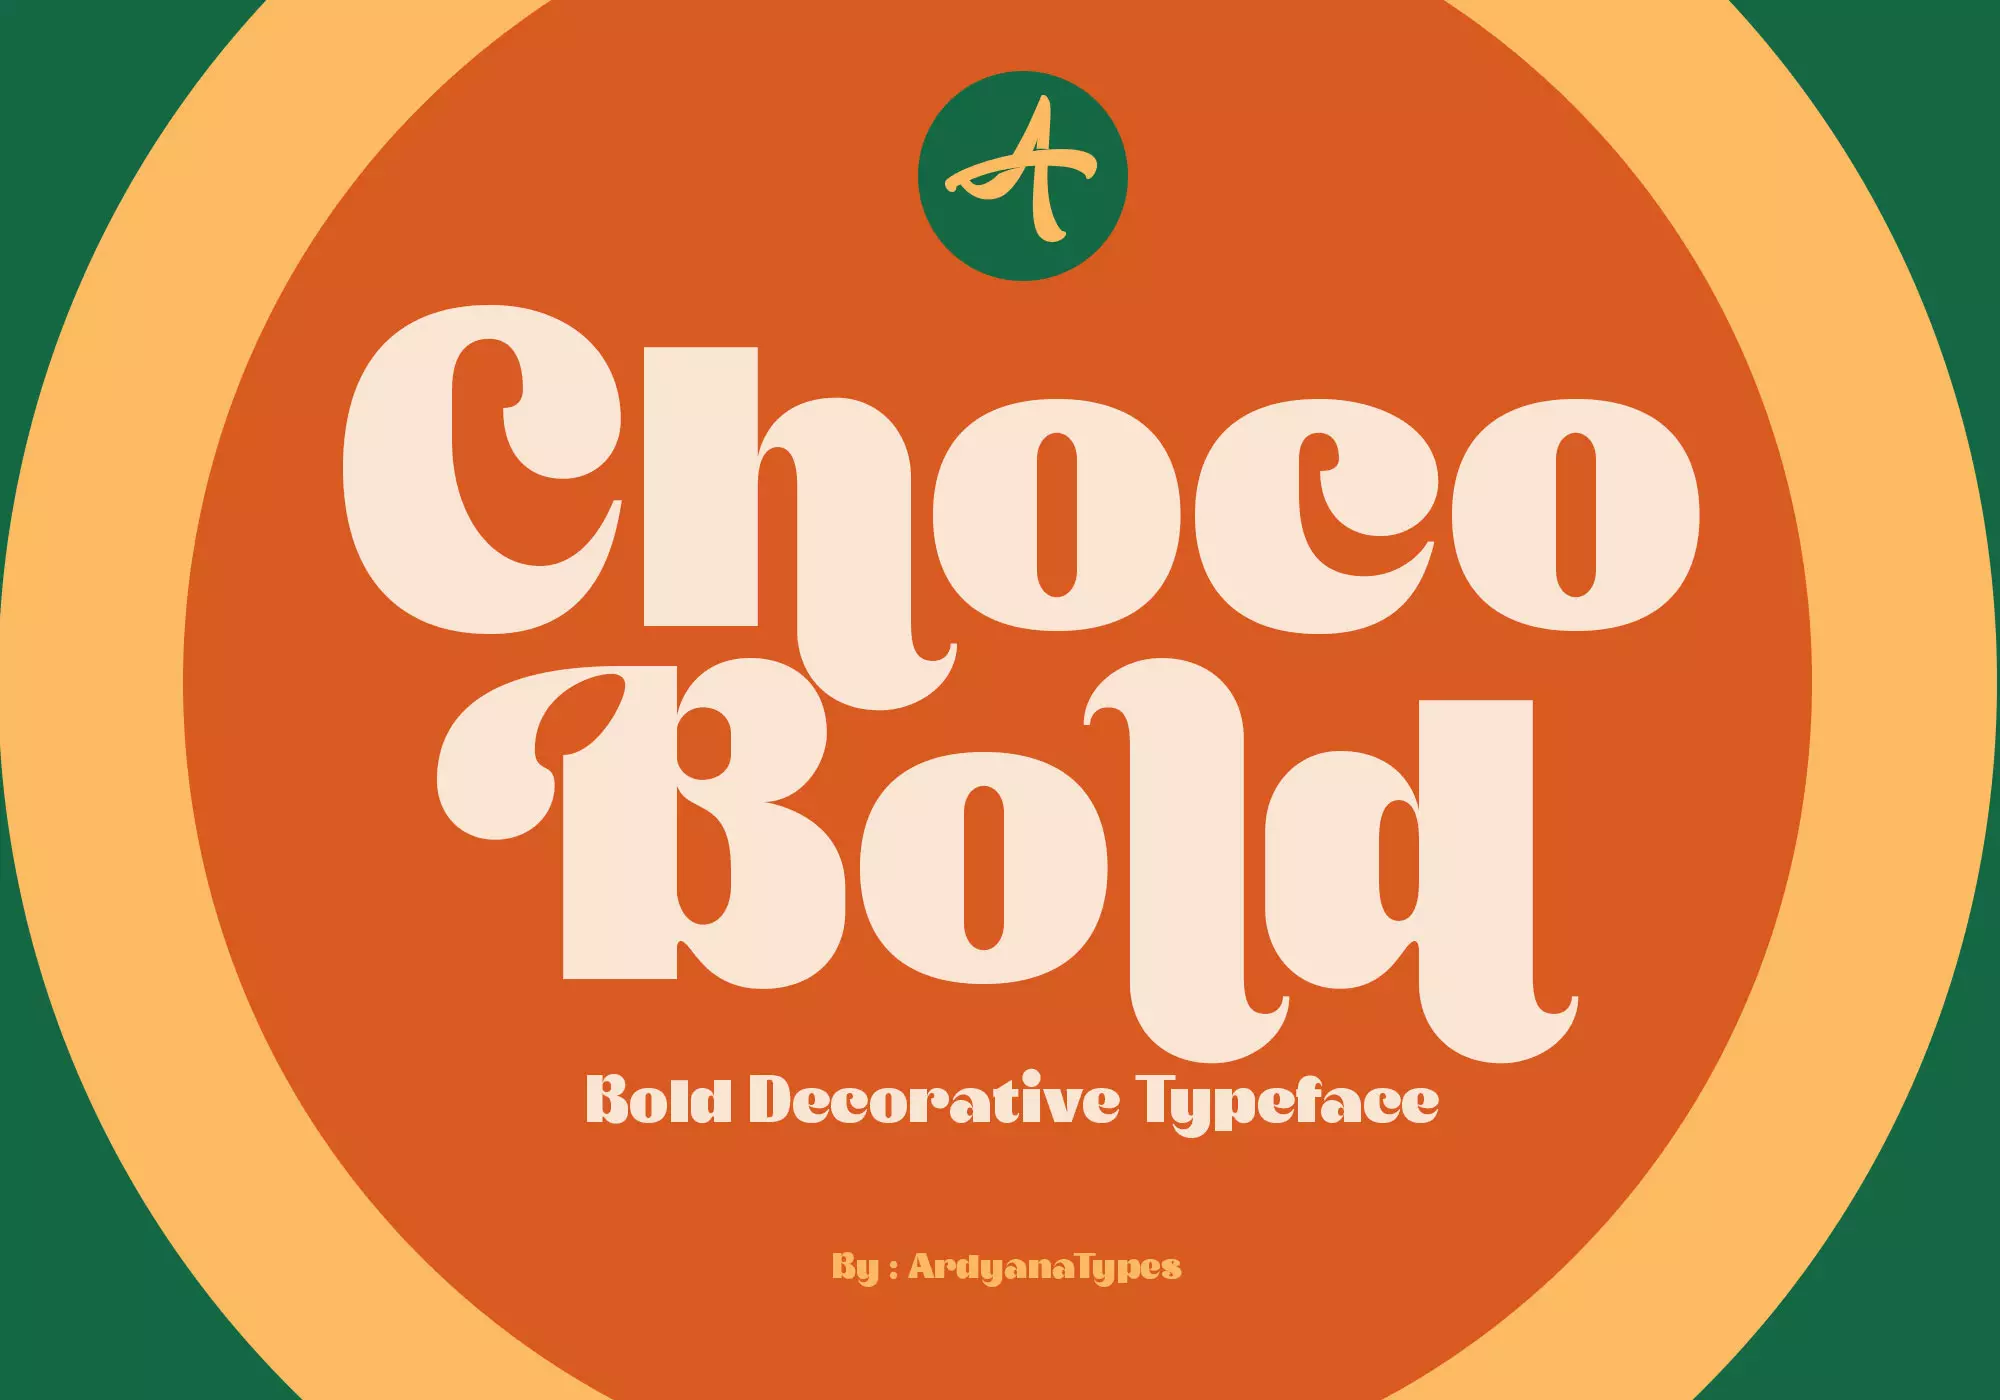 Choco Bold - Decorative Typeface